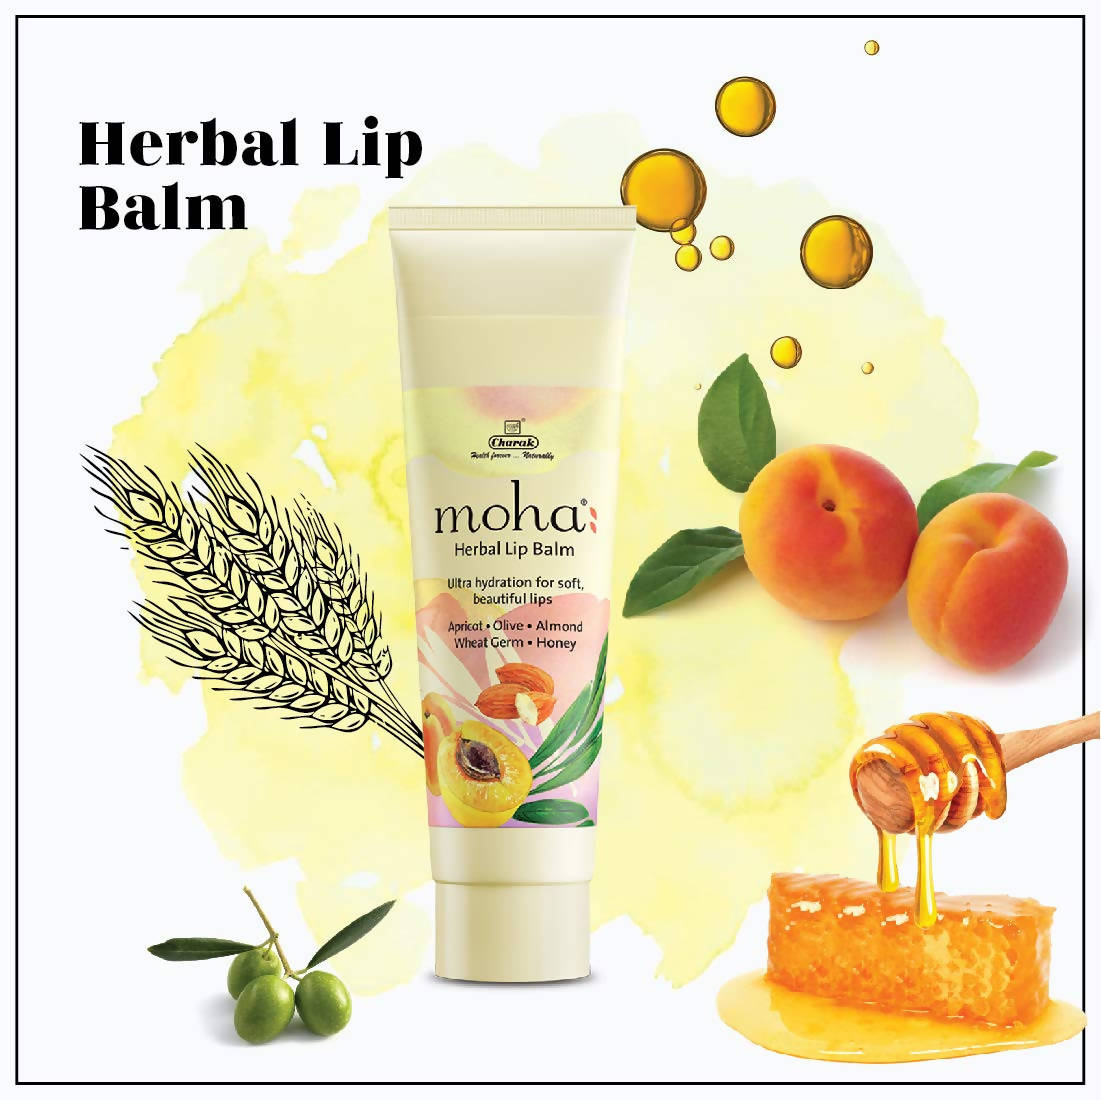 Herbal Lip Balm for women